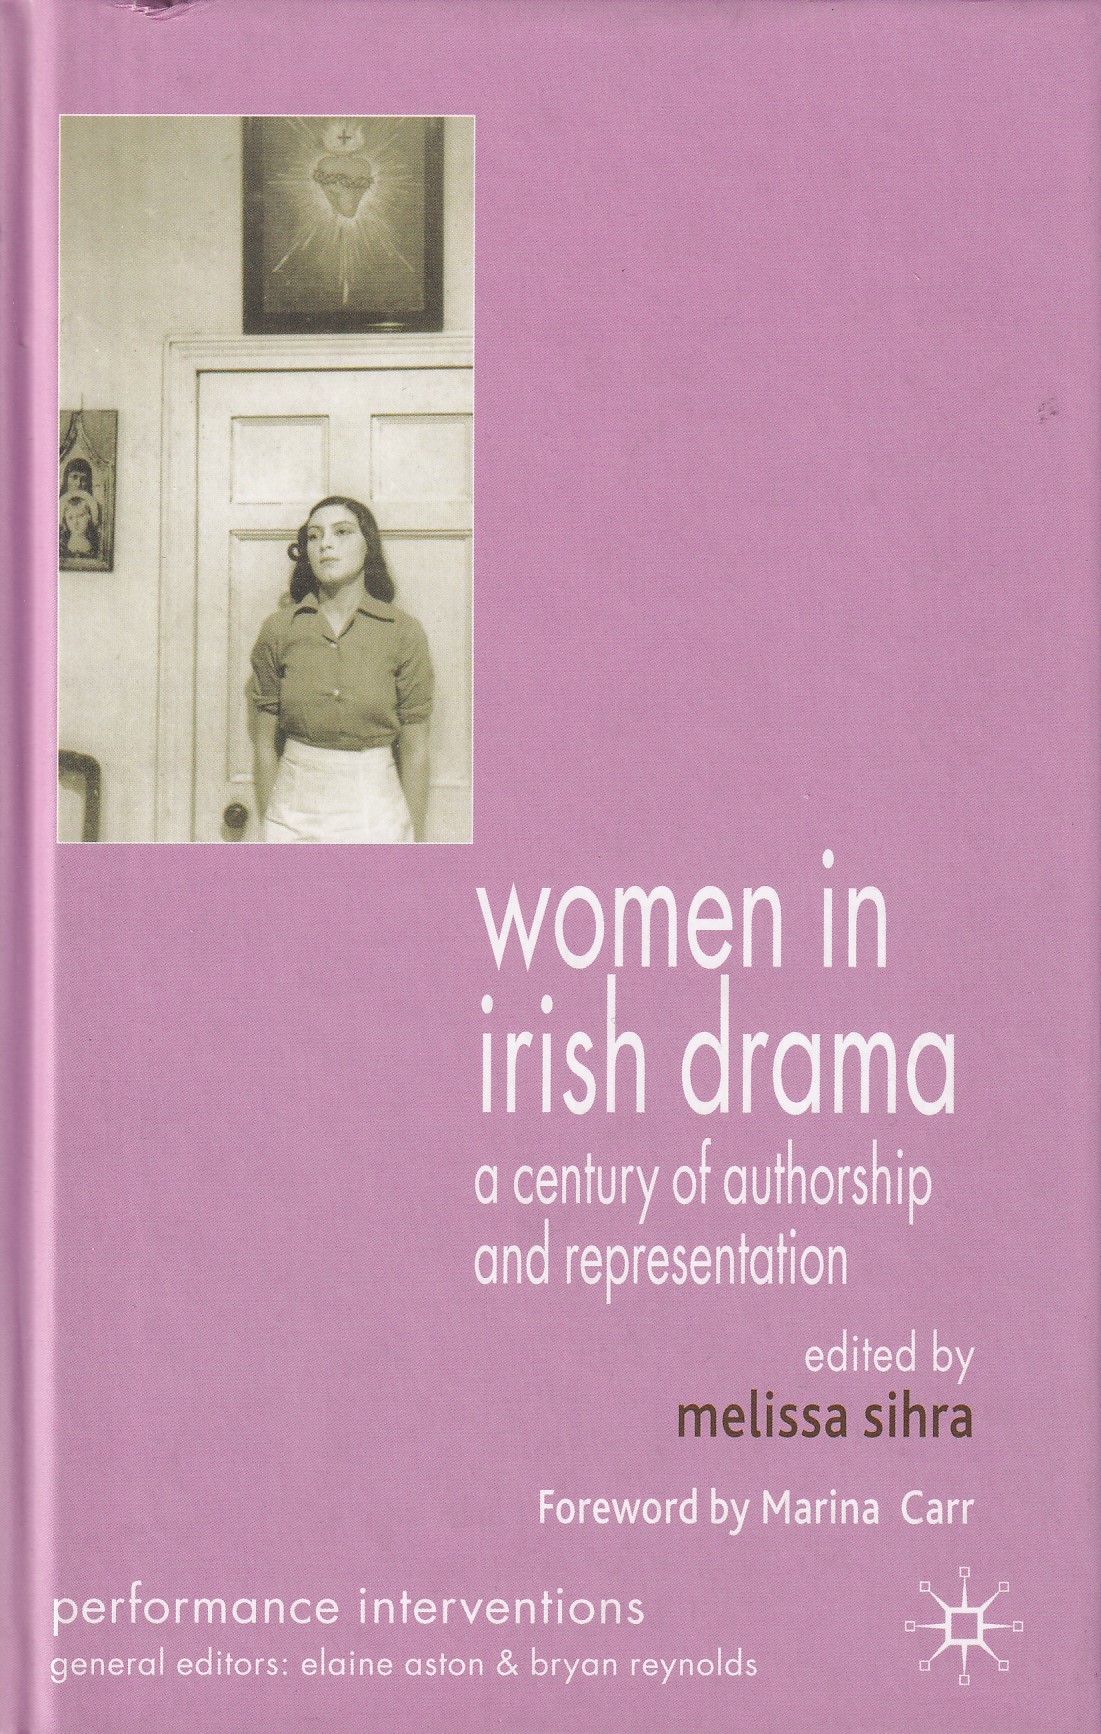 Women in Irish Drama: A Century of Authorship and Representation by Melissa Sihra (ed.)